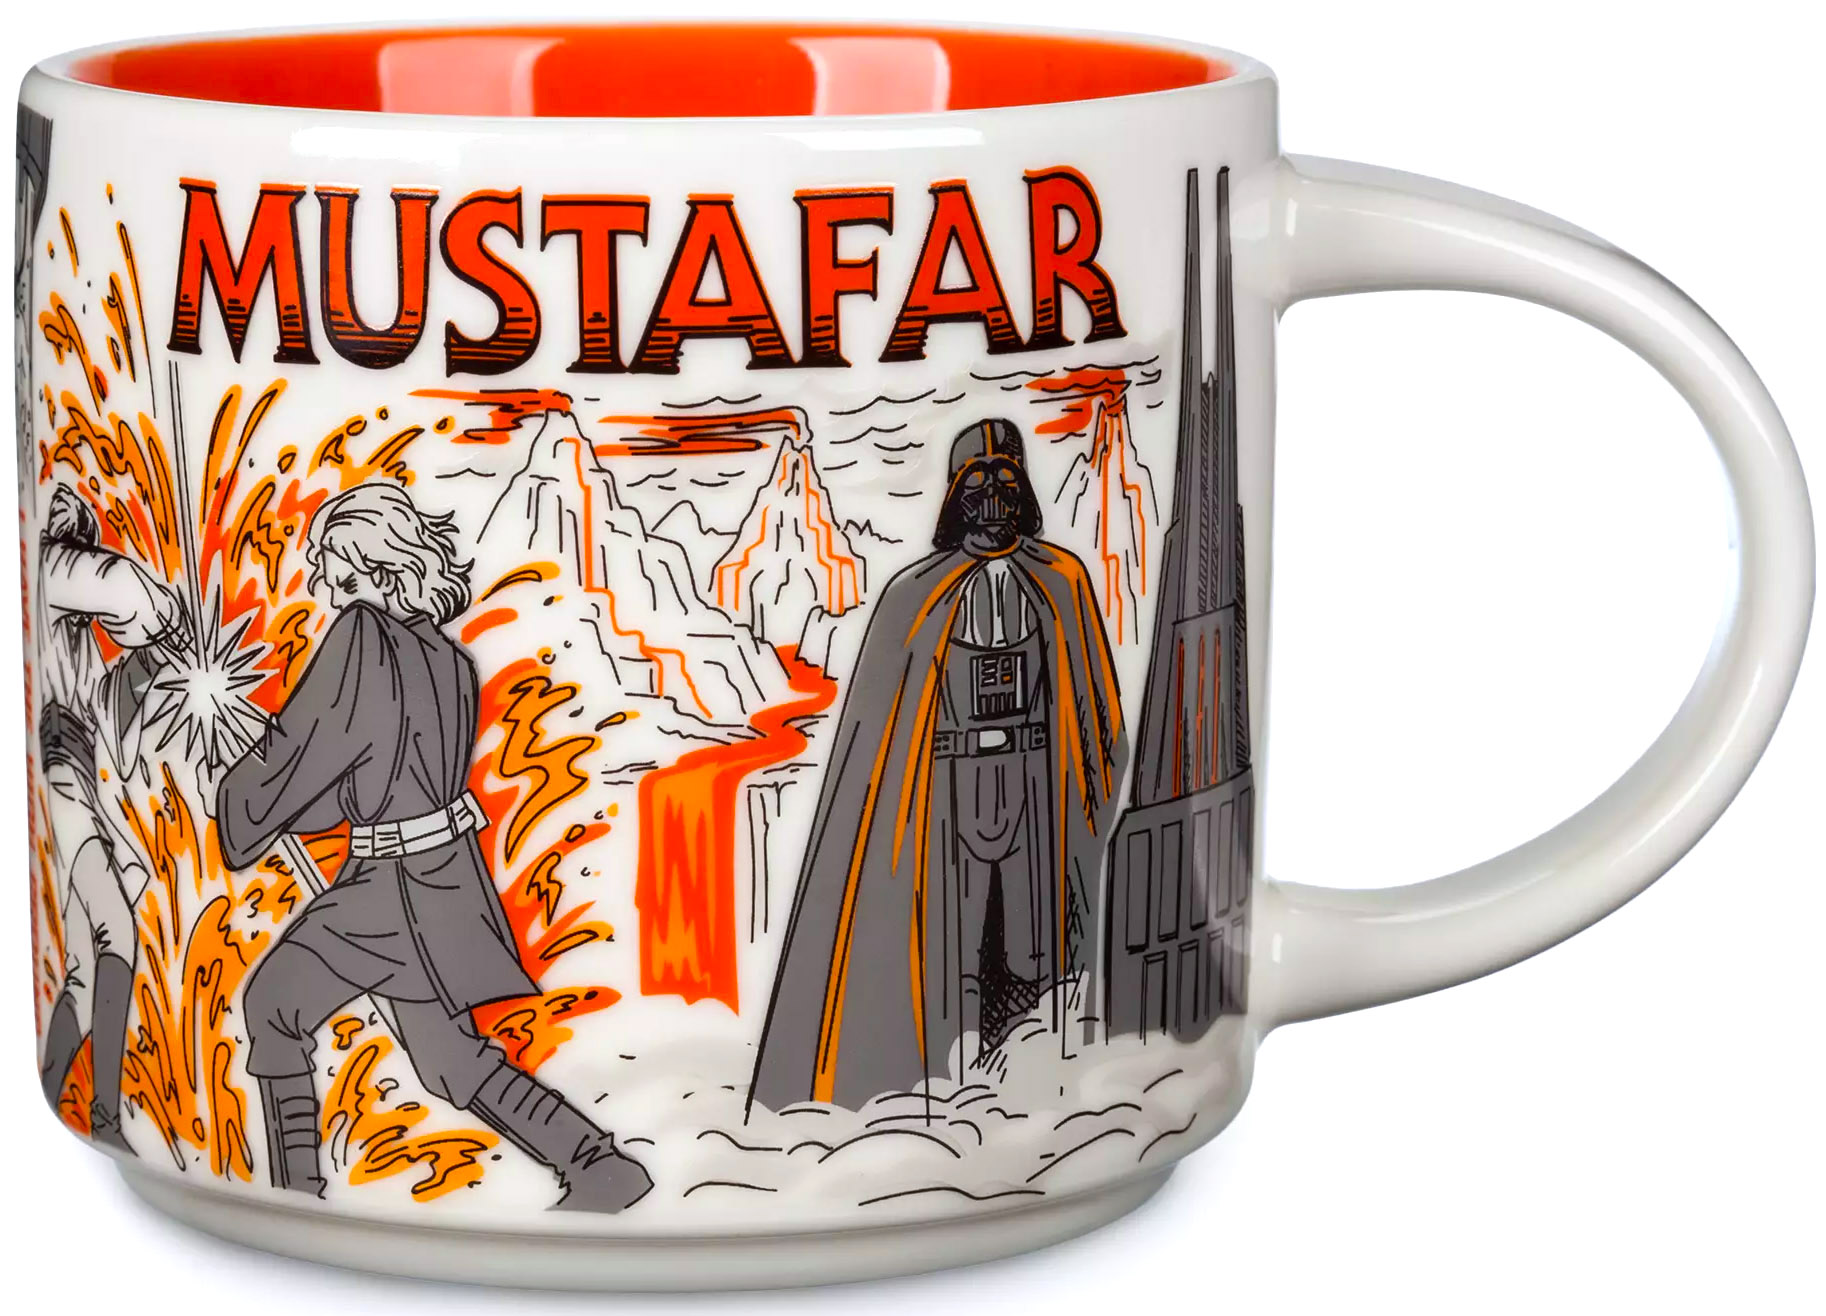 Starbucks Star Wars Been There Mustafar mug